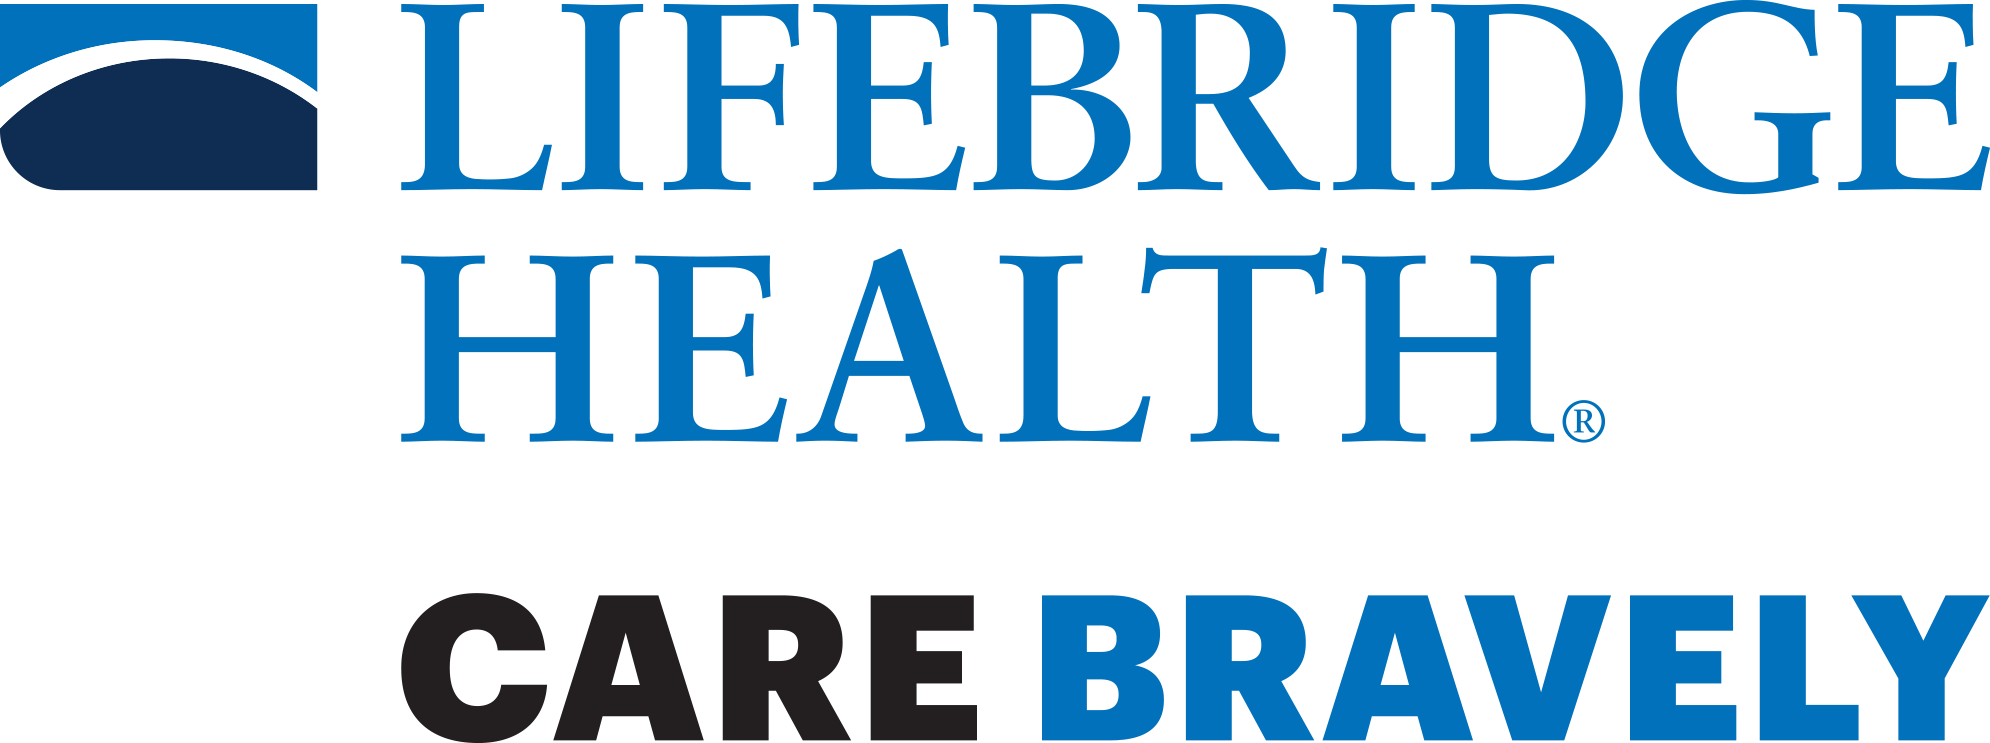 LifeBridge Health logo